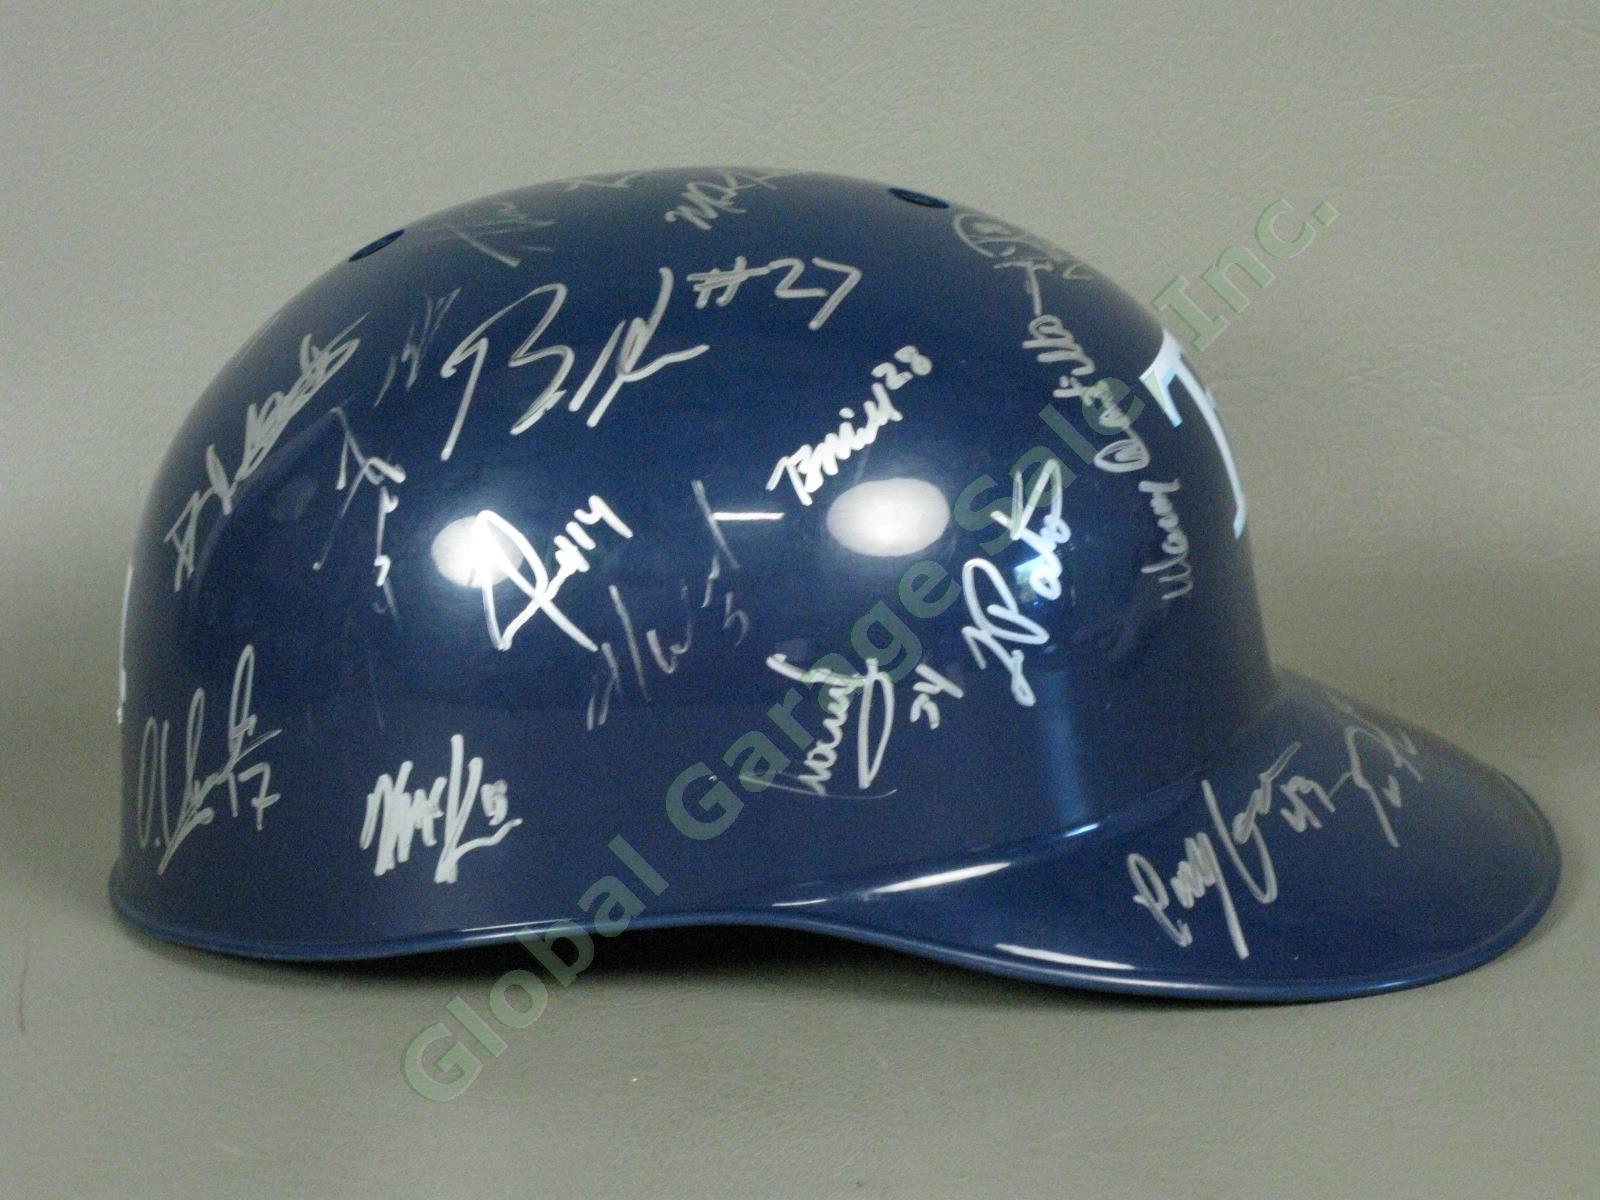 2014 Hudson Valley Renegades Team Signed Baseball Helmet NYPL Tampa Bay Rays NR 1